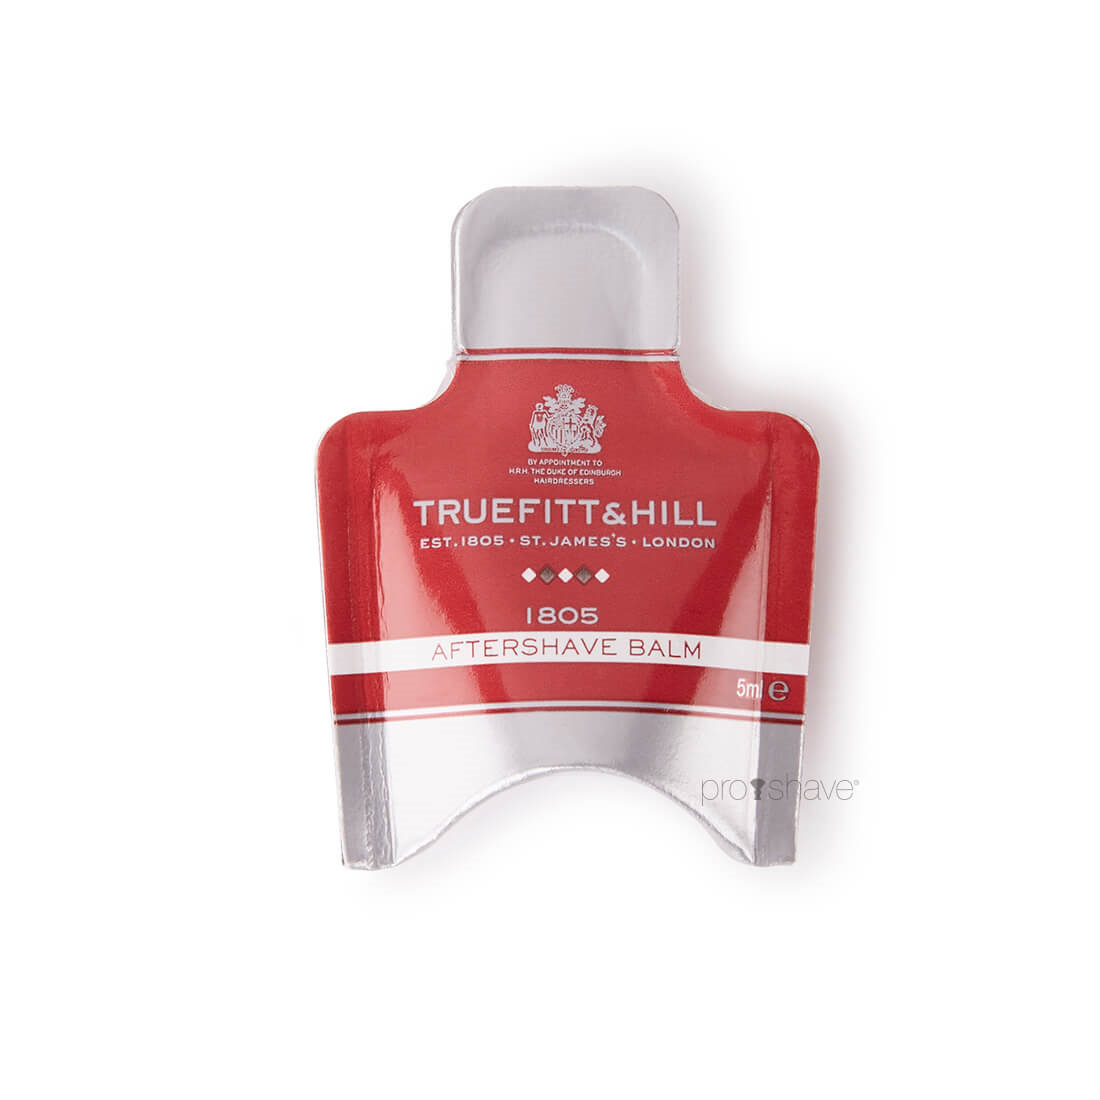 Truefitt & Hill 1805 Aftershave Balm Sample Pack, 5 ml.